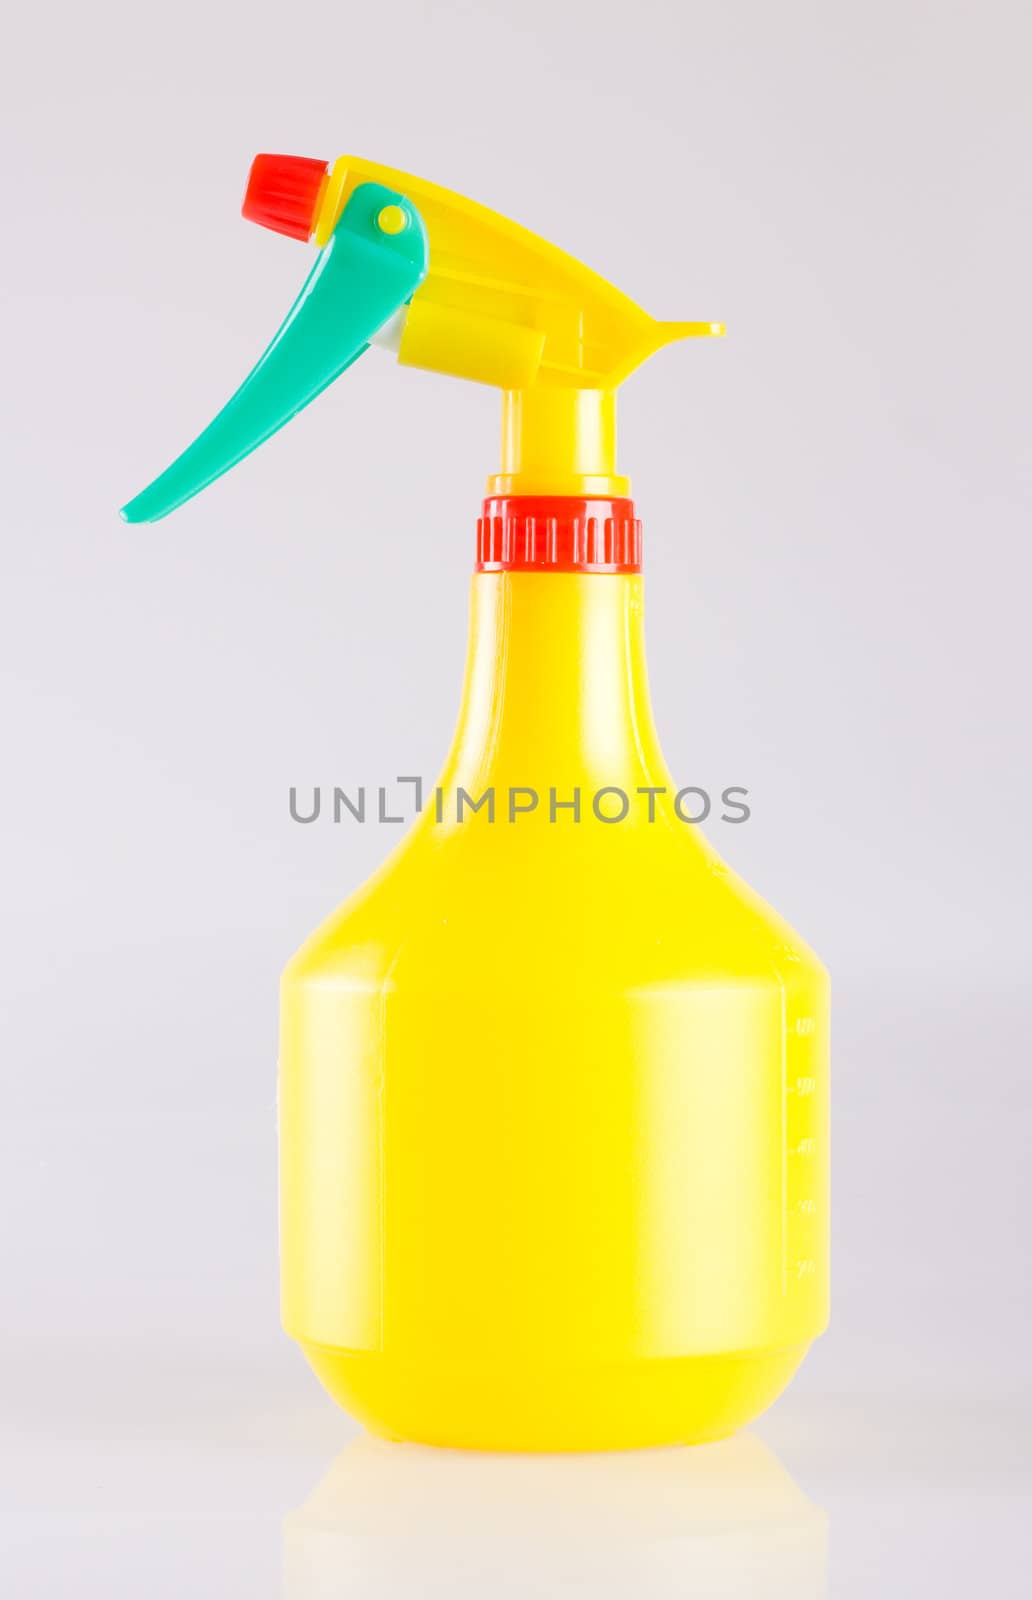 Plastic bottle isolated on white.